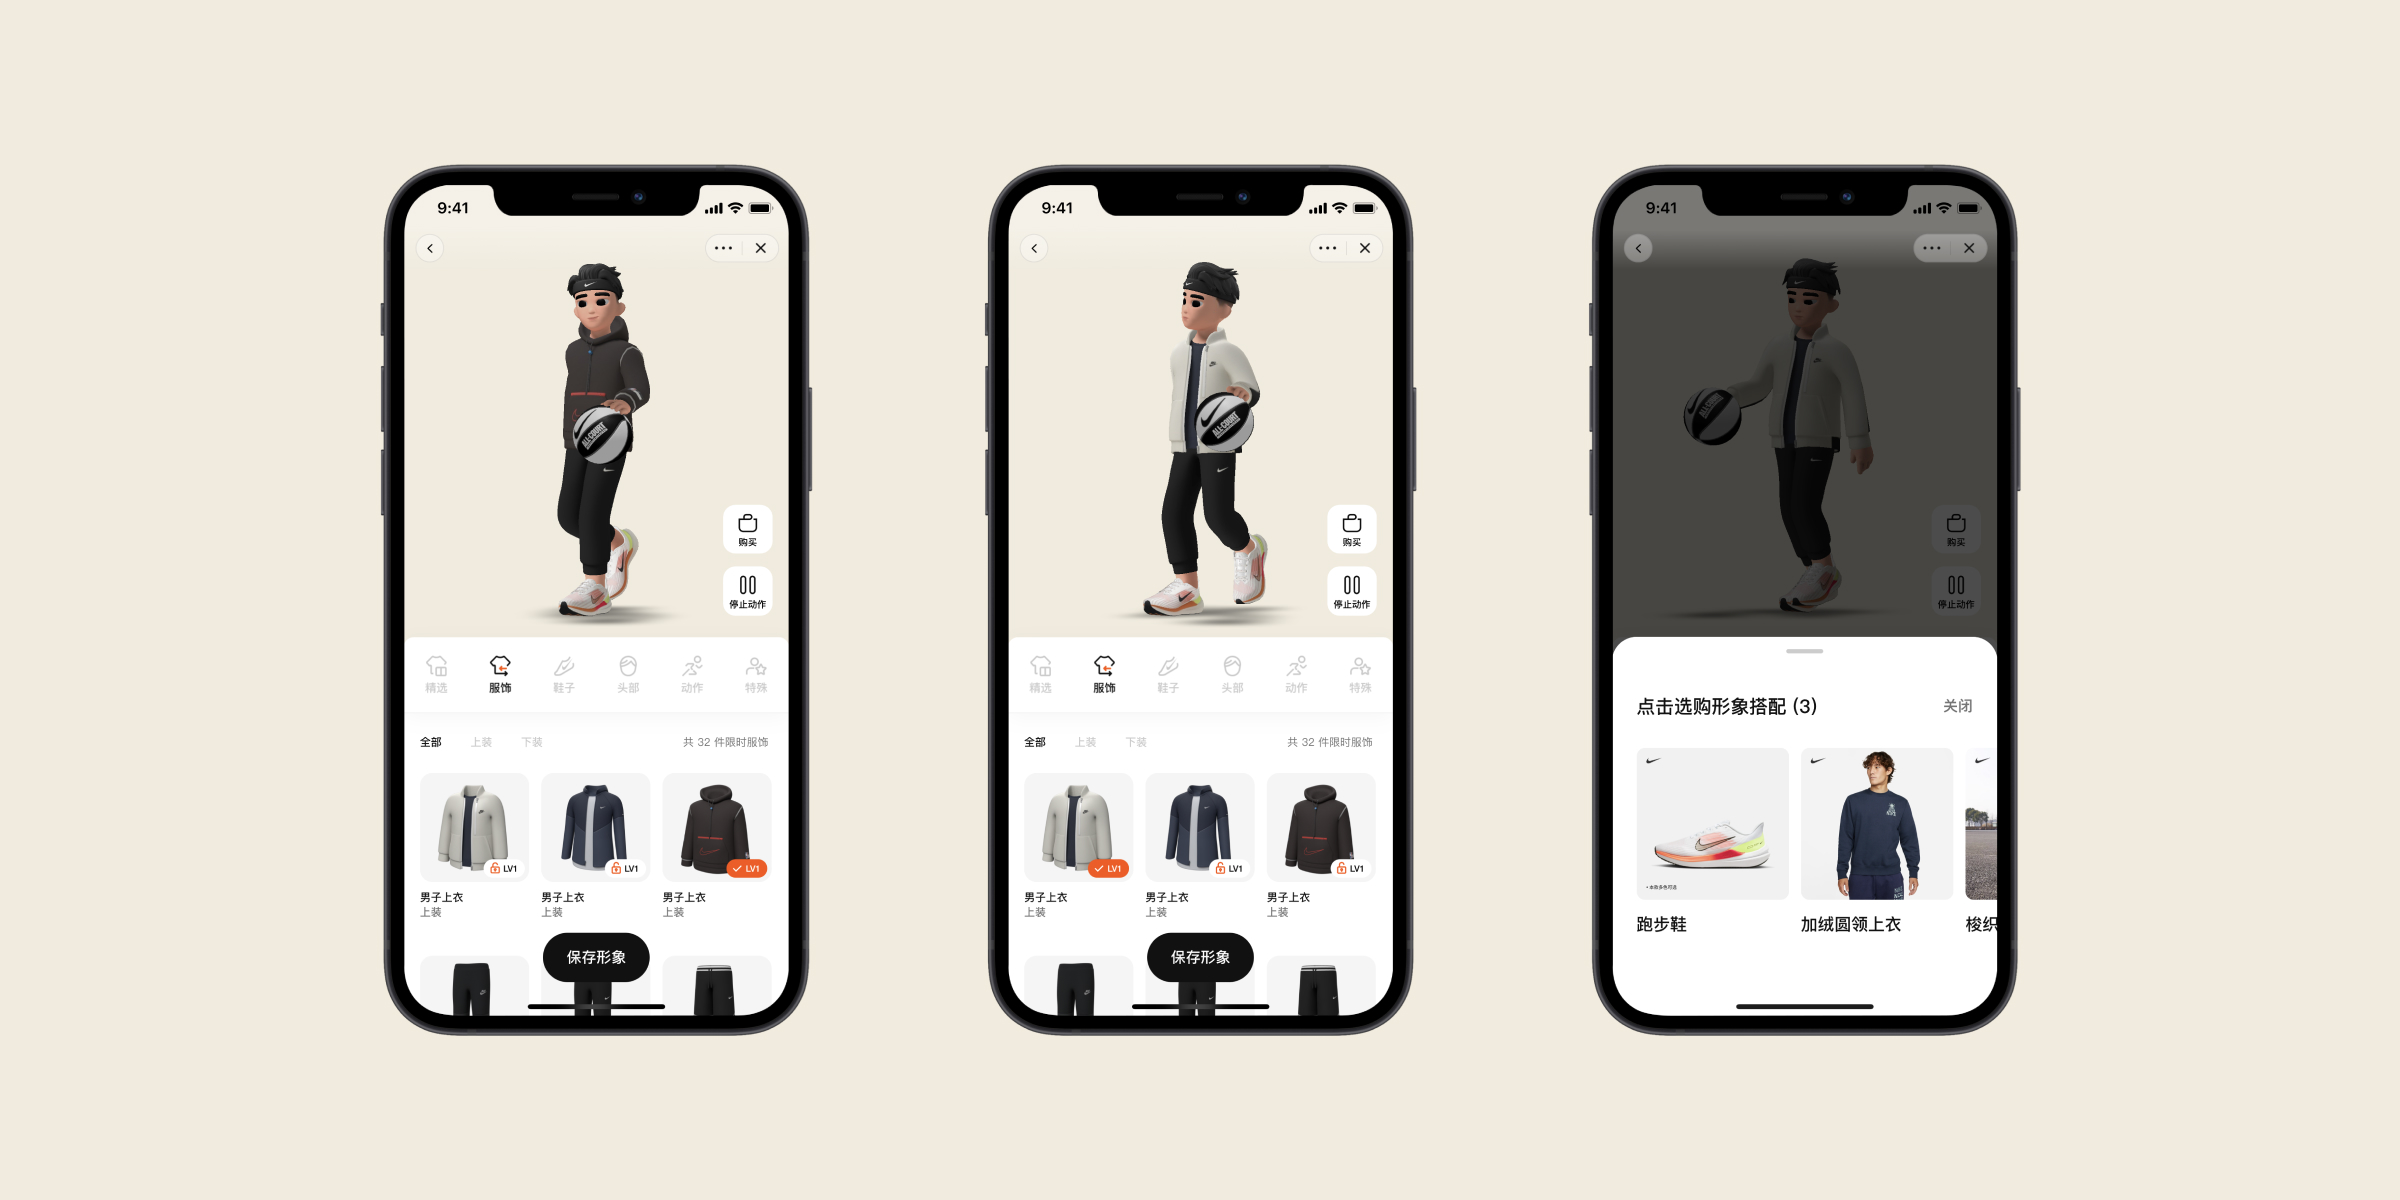 Nike avatar to shop